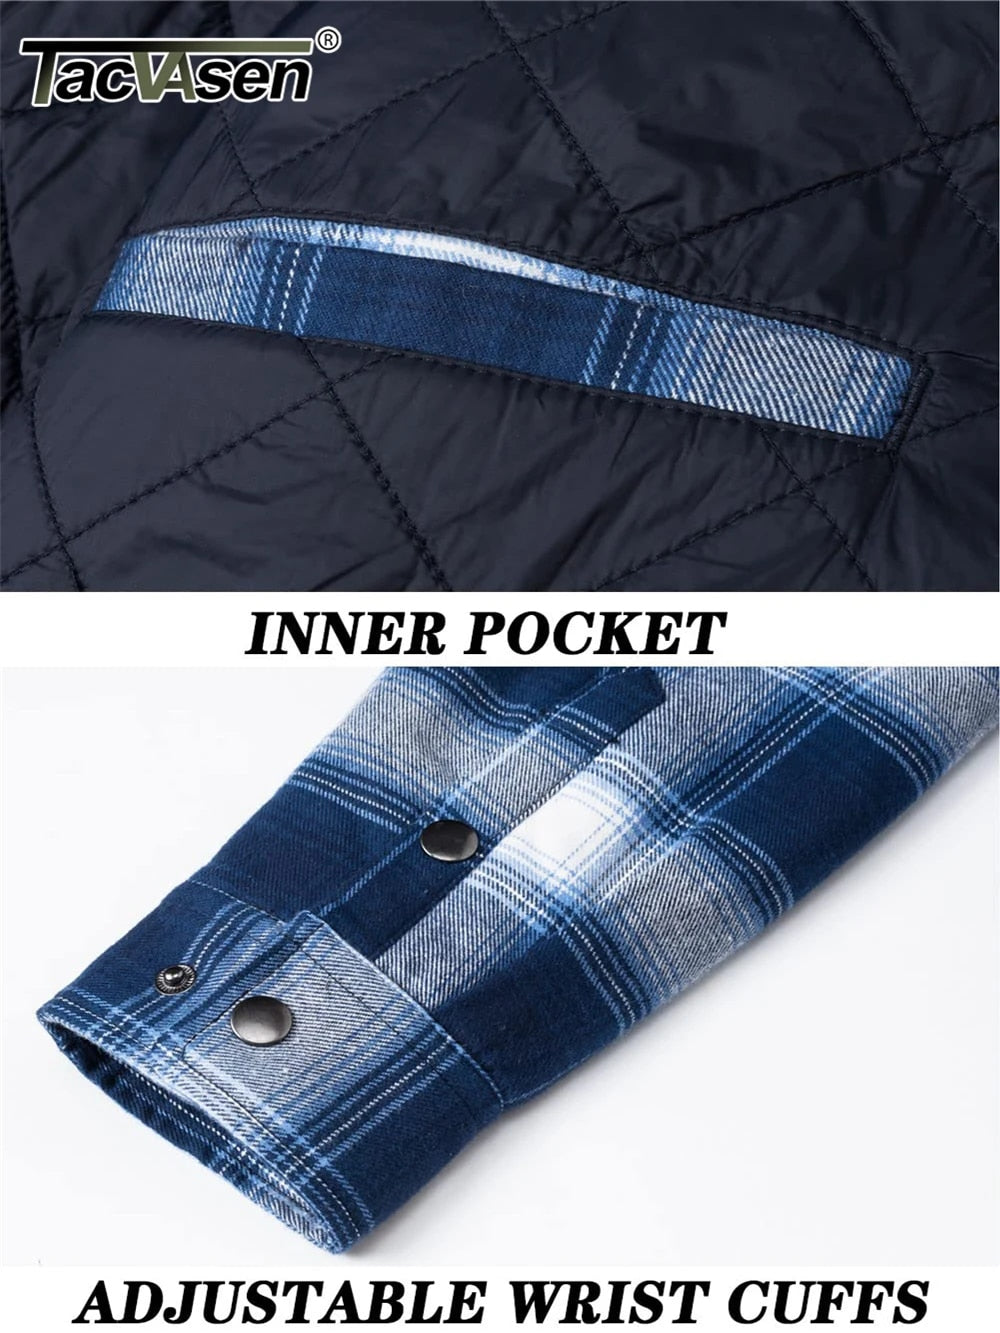 Inner pocket and adjustable cuffs on men's flannelette jacket.